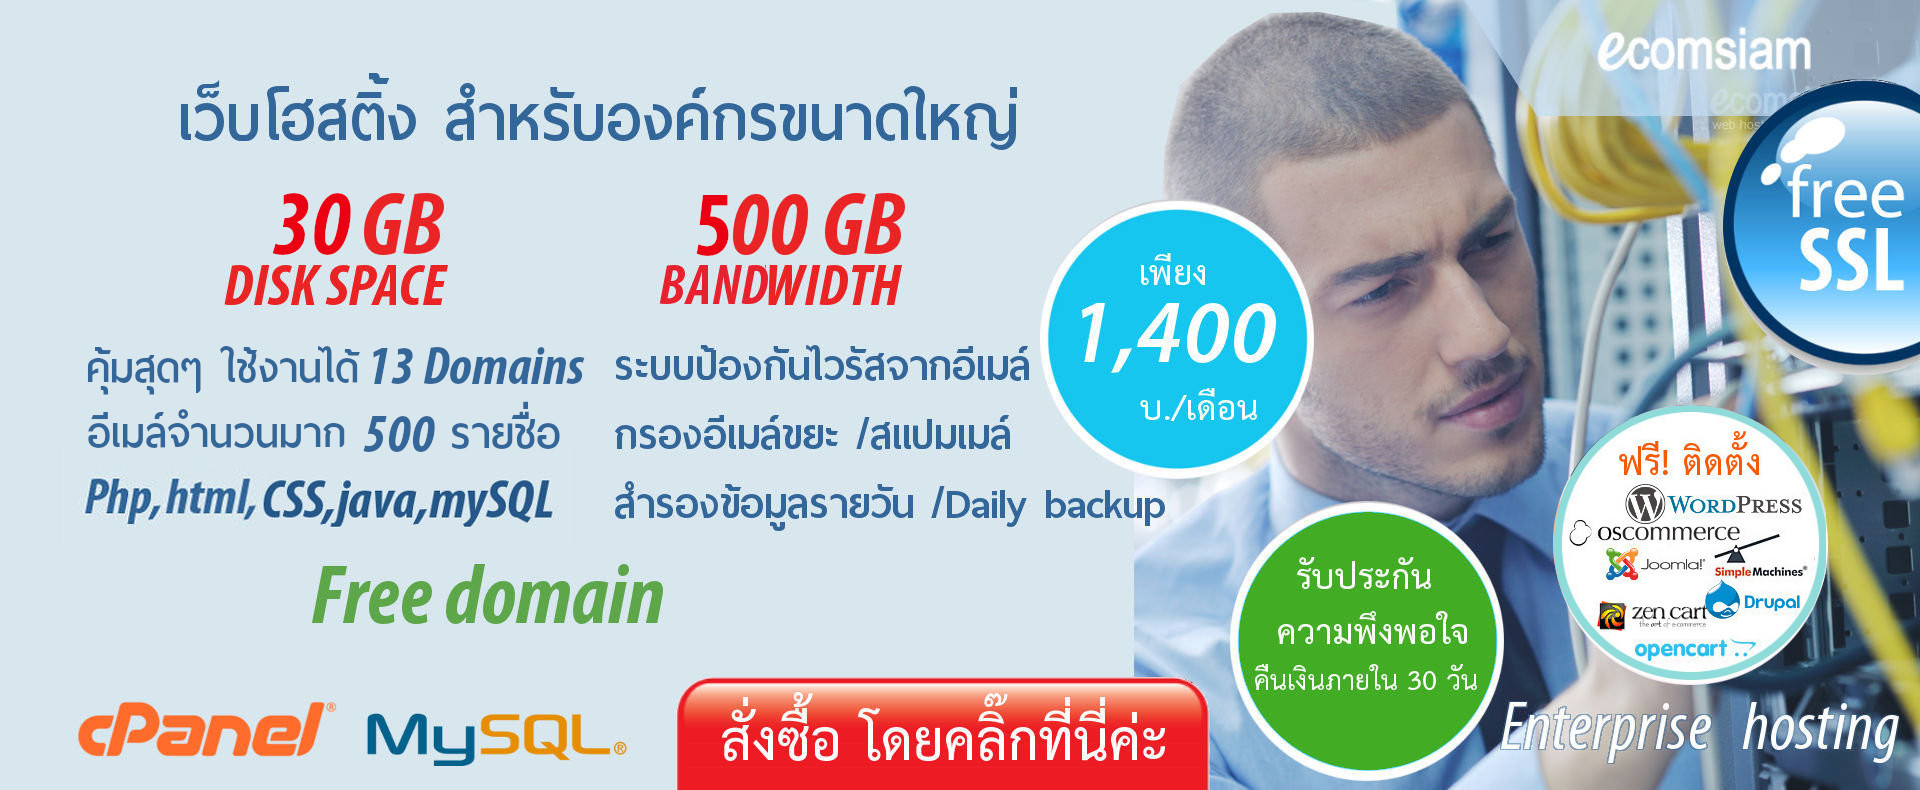 web hosting thai แนะนำ Enterprise web hosting thailand เว็บโฮสต์ติ้งสำหรับองค์กรขนาดใหญ่ ไม่จำกัดโดเมน ราคาเพียง 1,400 บ./เดือน เว็บโฮสติ้งไทย ฟรี โดเมน ฟรี SSL ฟรีติดตั้ง แนะนำเว็บโฮสติ้ง บริการลูกค้า  Support ดูแลดี โดย ecomsiam.com - enterprise web hosting thailand free domain